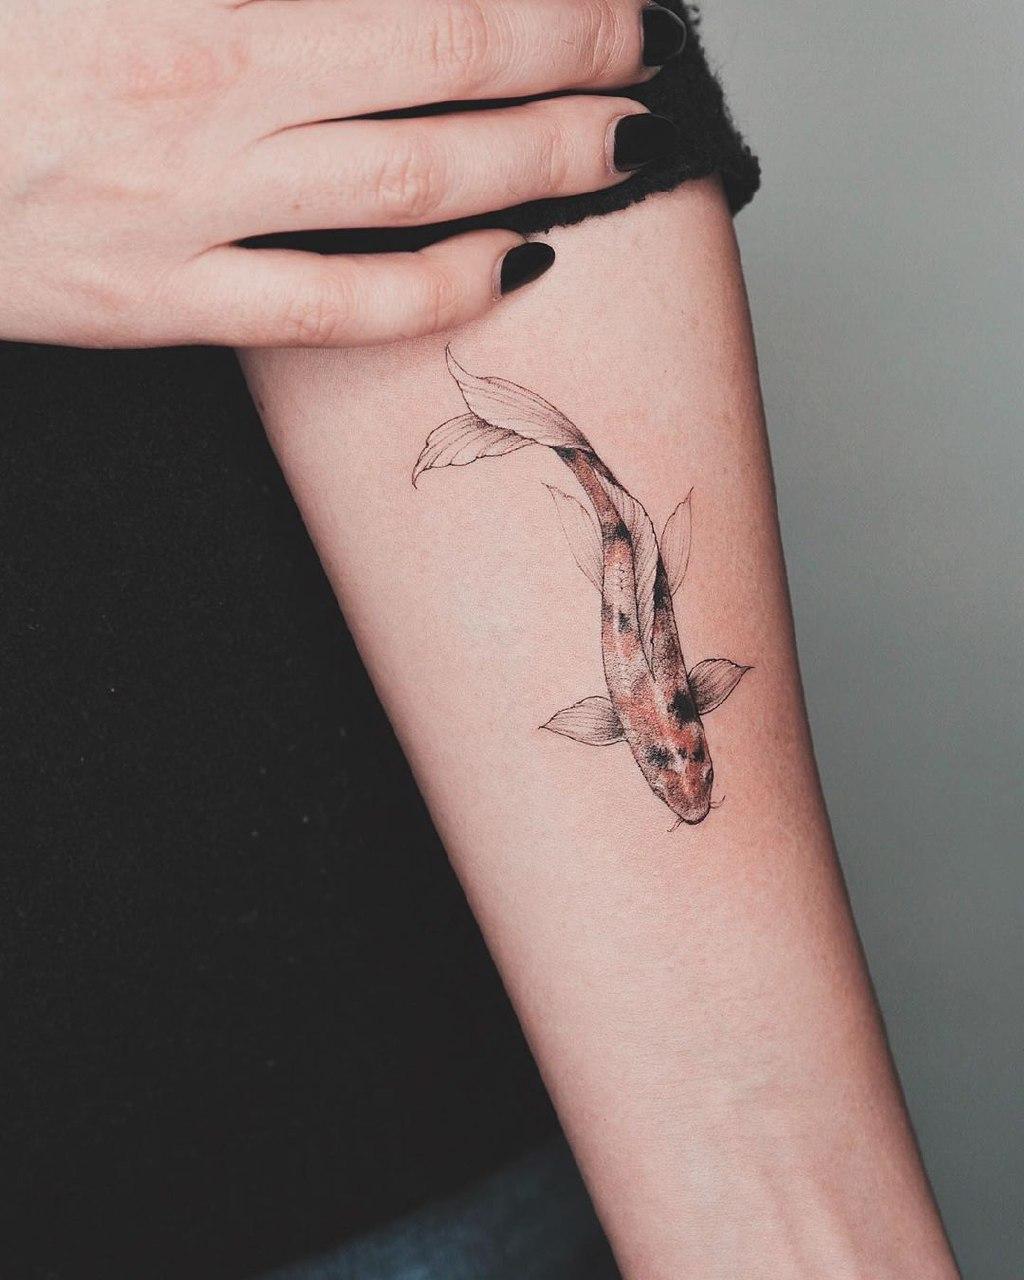 goldfish tattoo